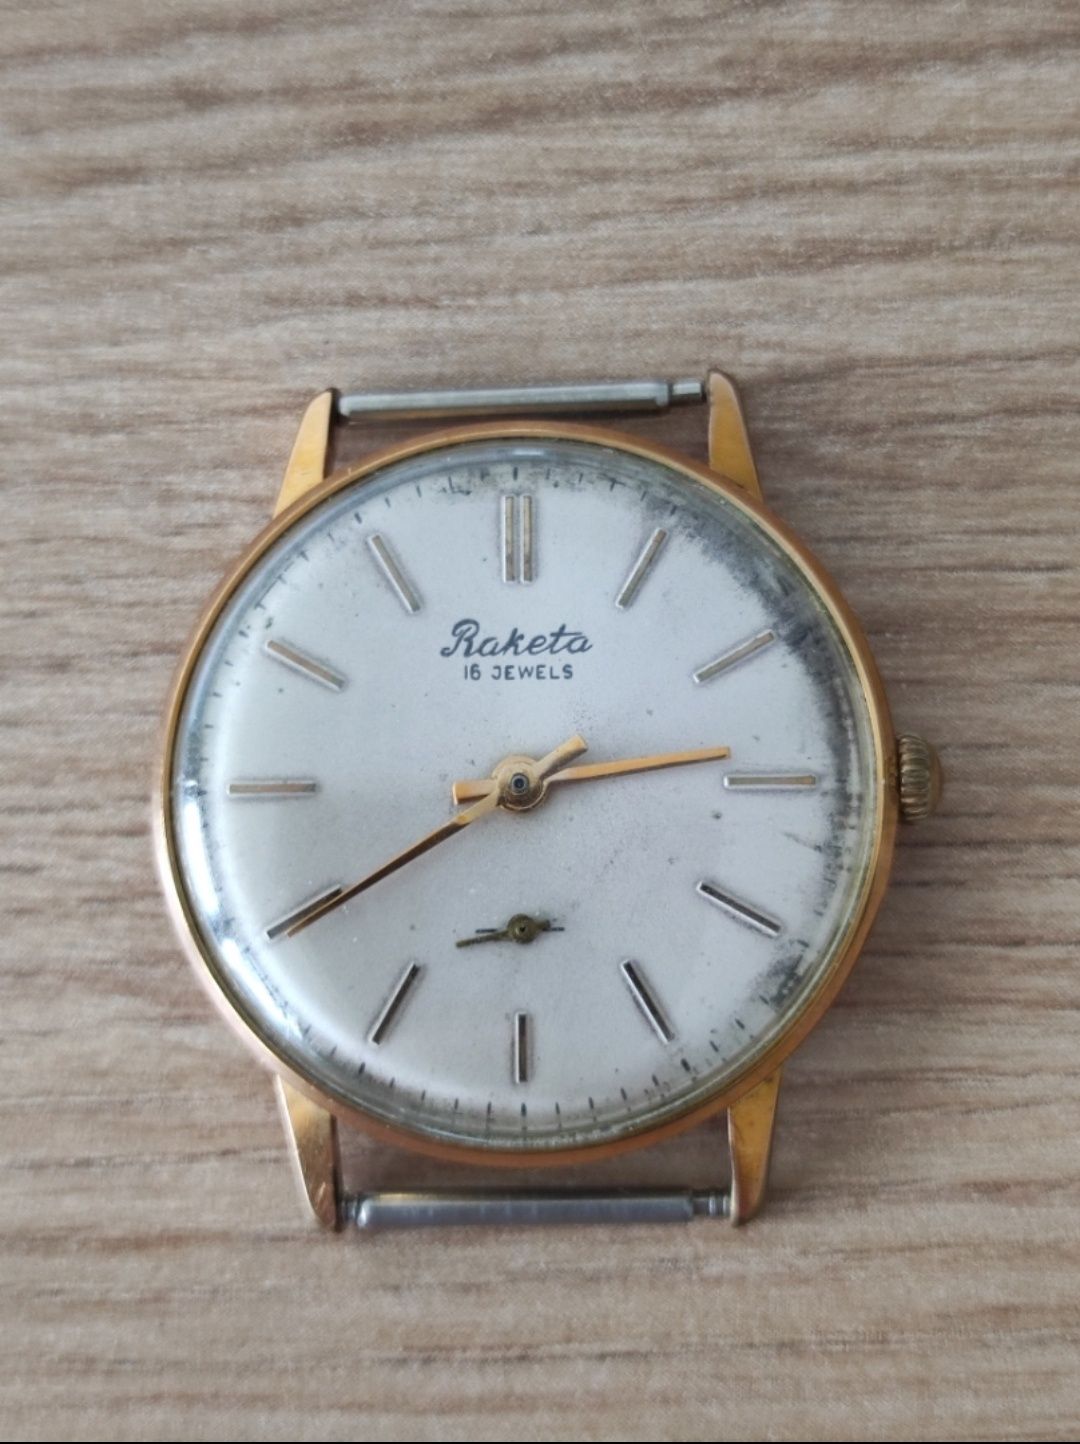 Vintage zegarek męski RAKETA Made in USSR chodzi